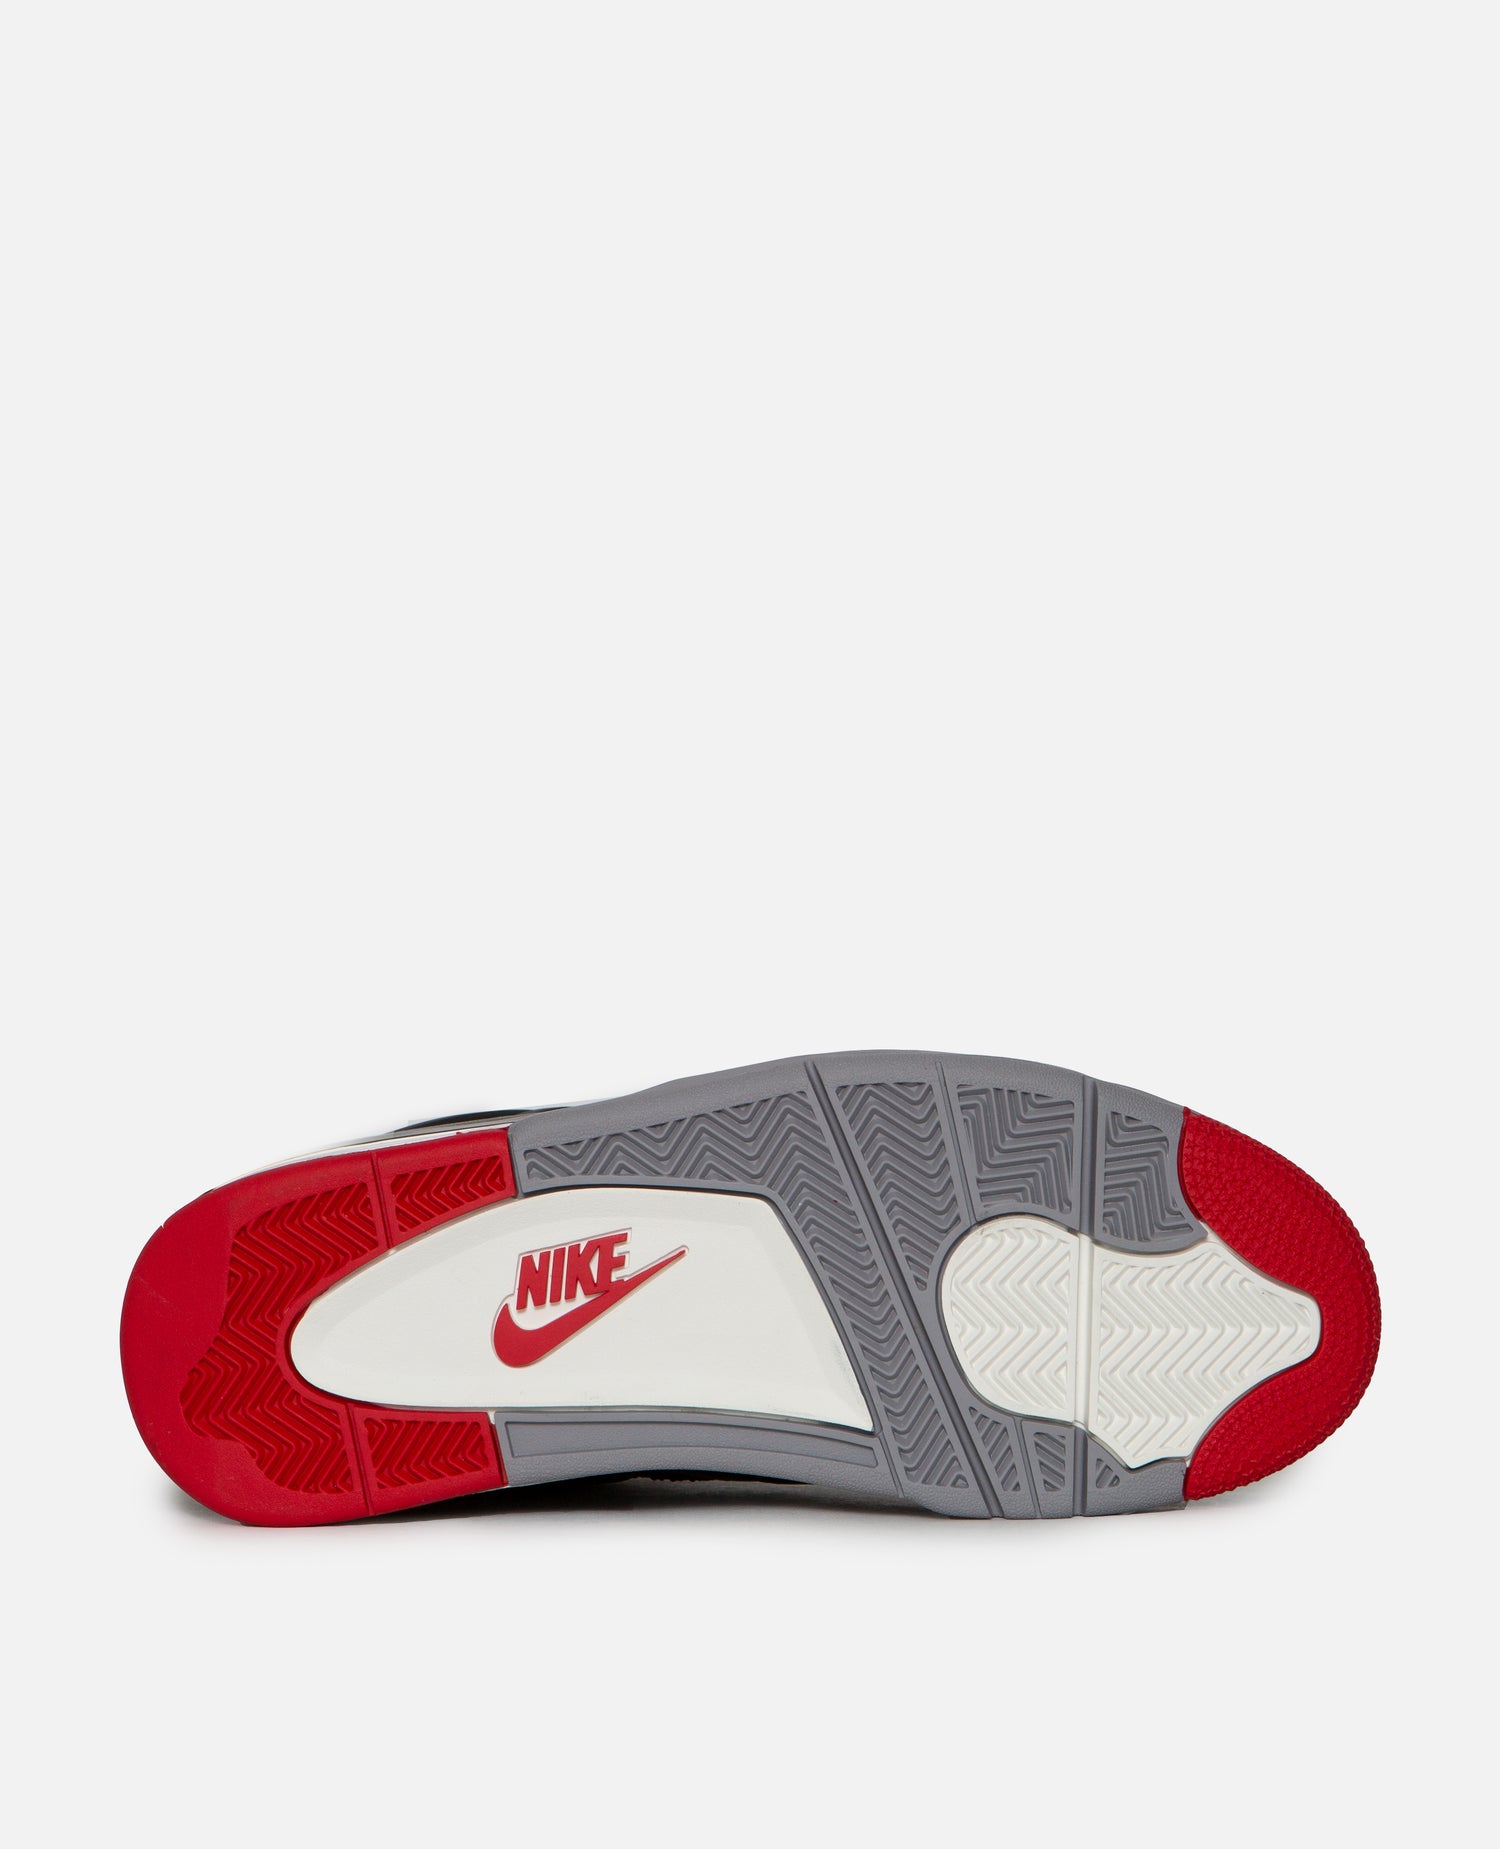 Nike Air Jordan 4 Retro (Black/Fire Red-Cement Grey-Summit White)